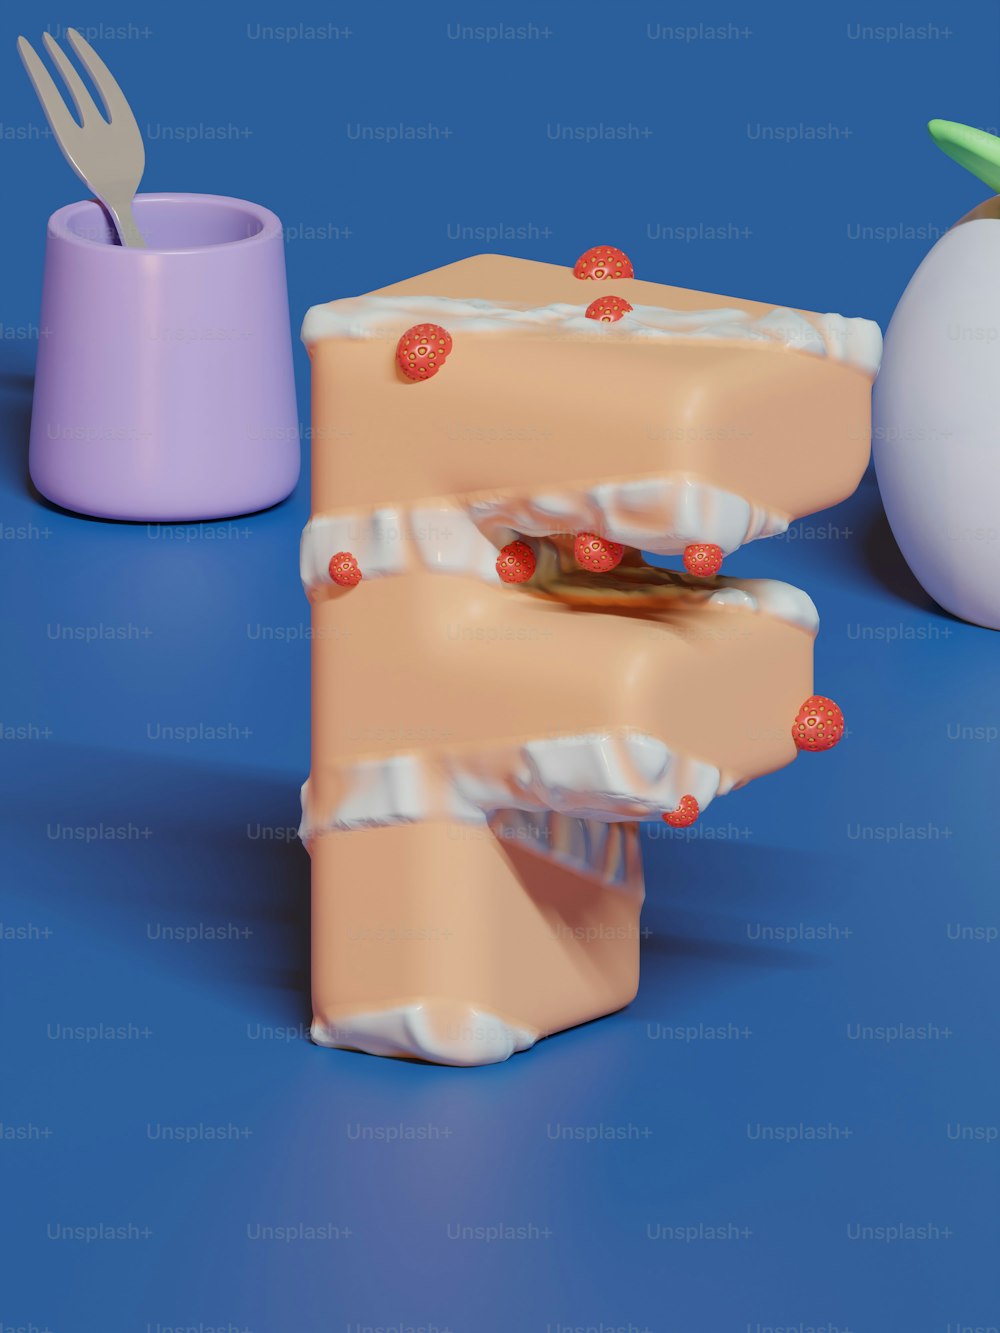 Un modelo 3D de un pedazo de pastel con un tenedor que sobresale de él